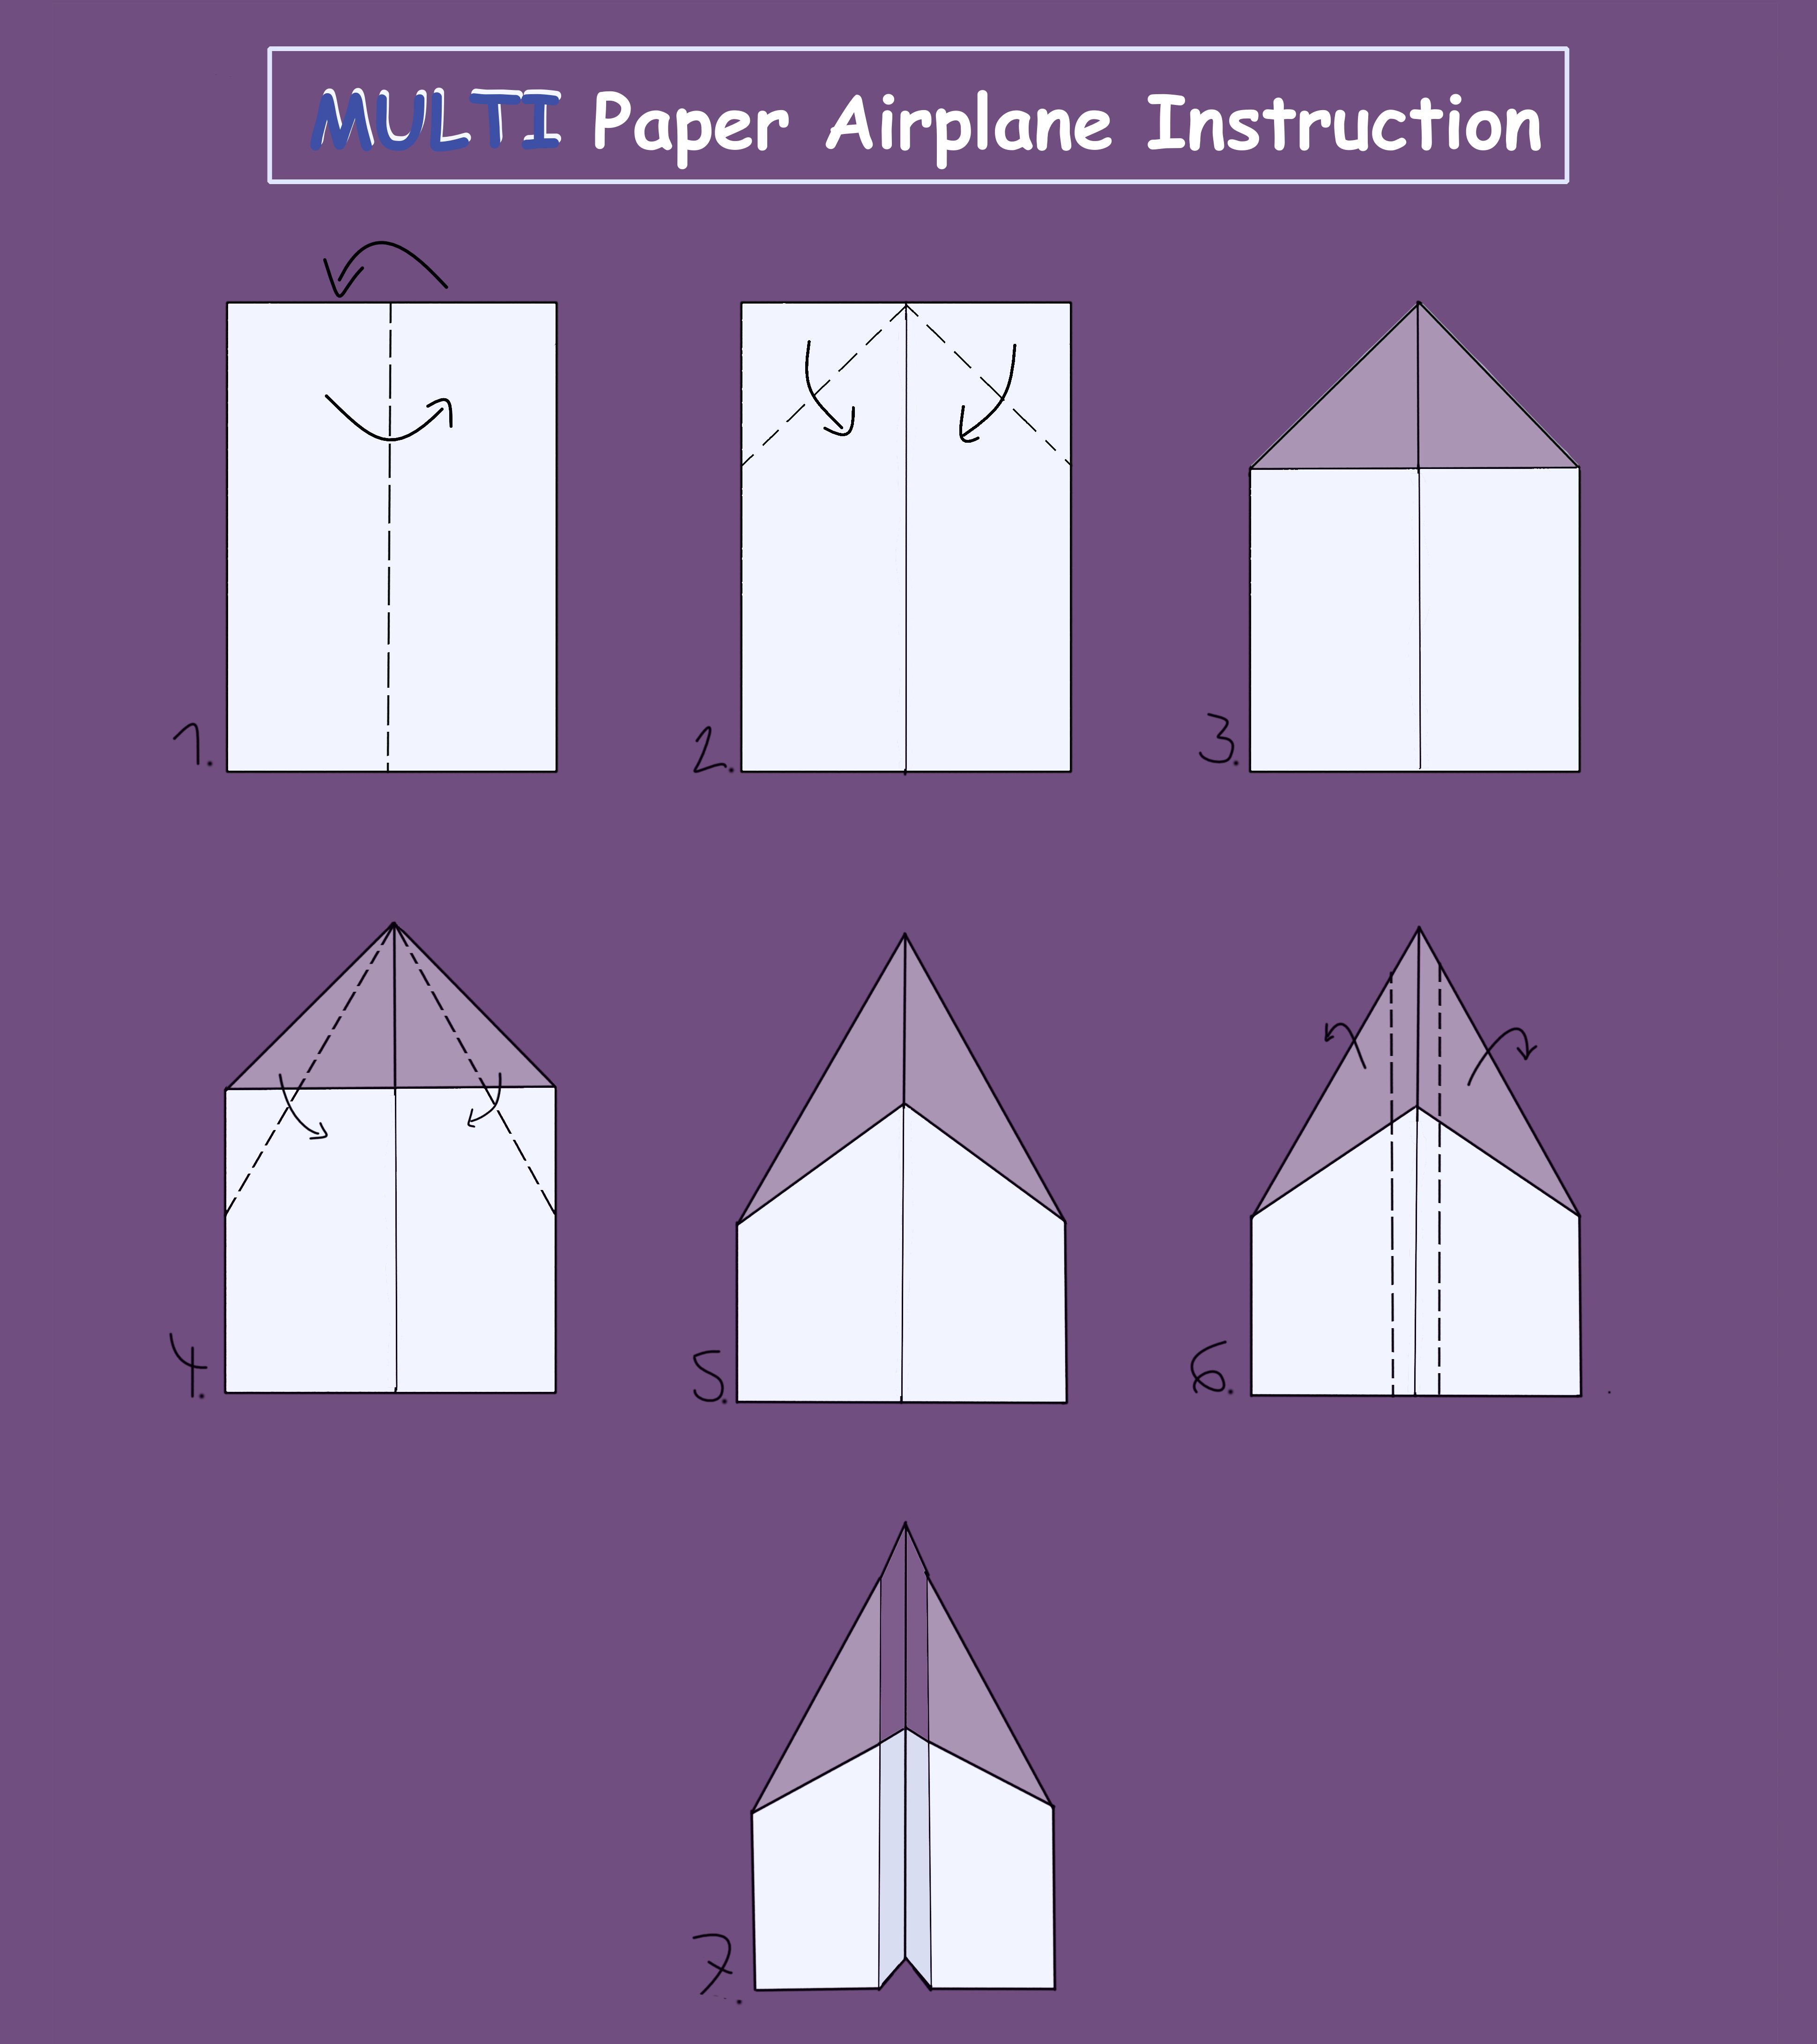 MULTI-Paperplane_Final